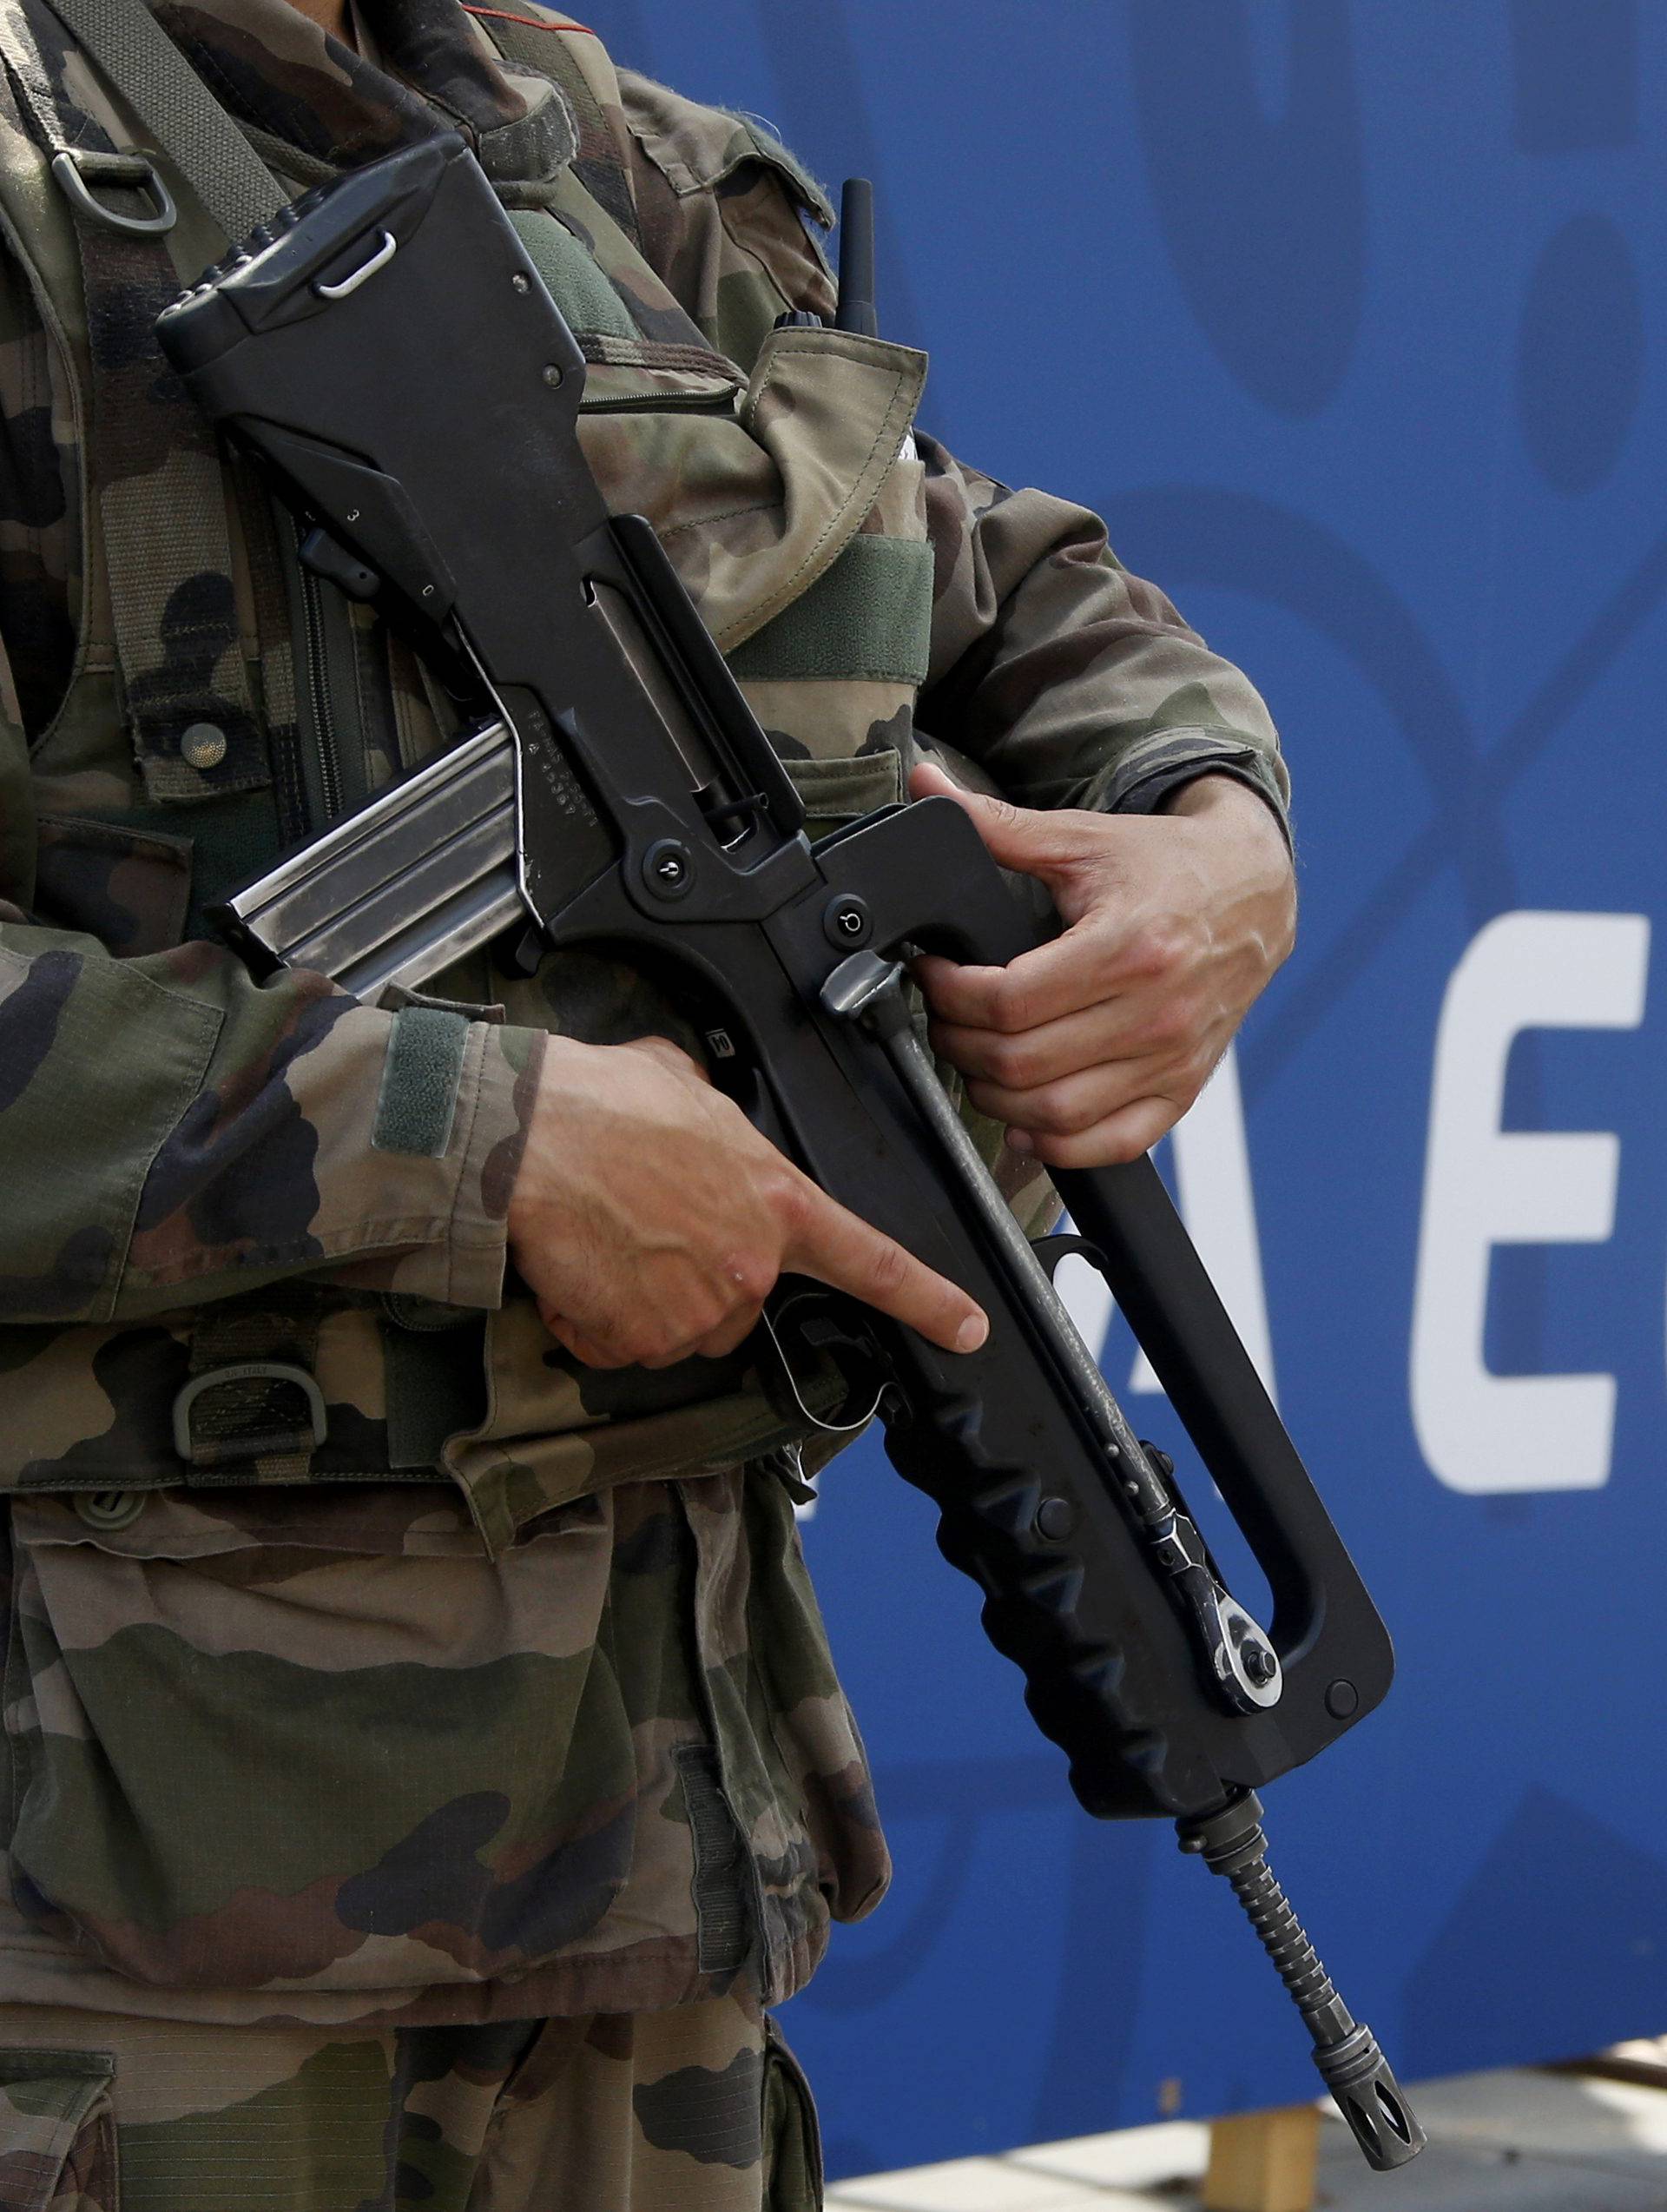 A soldier patrols outside a fan zone ahead of the UEFA 2016 European Championship in Nice